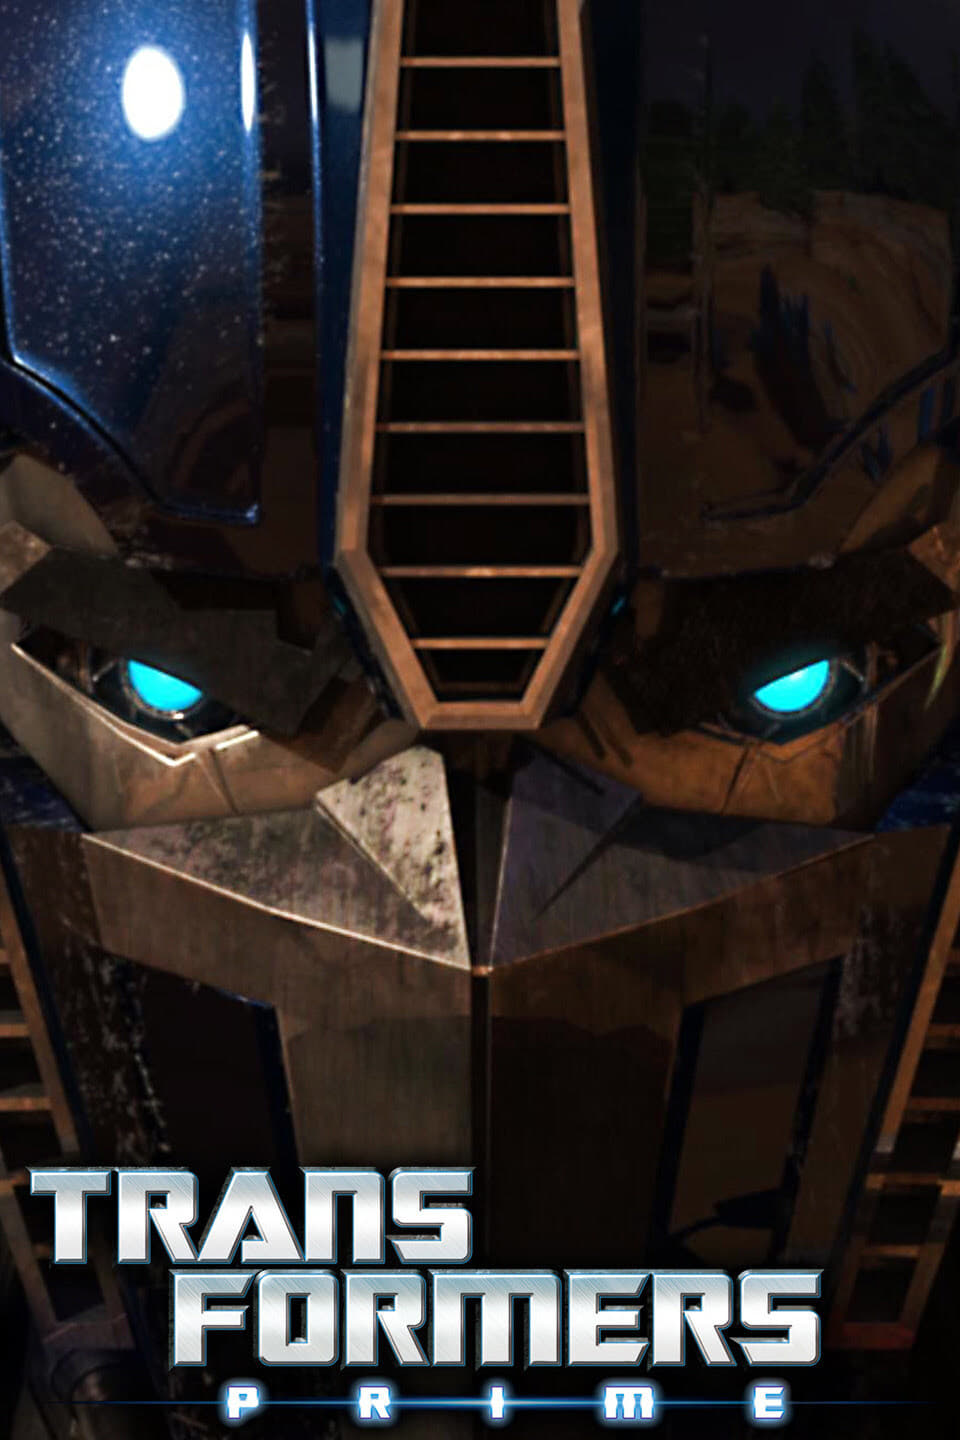 Plakát pro film “Transformers Prime”